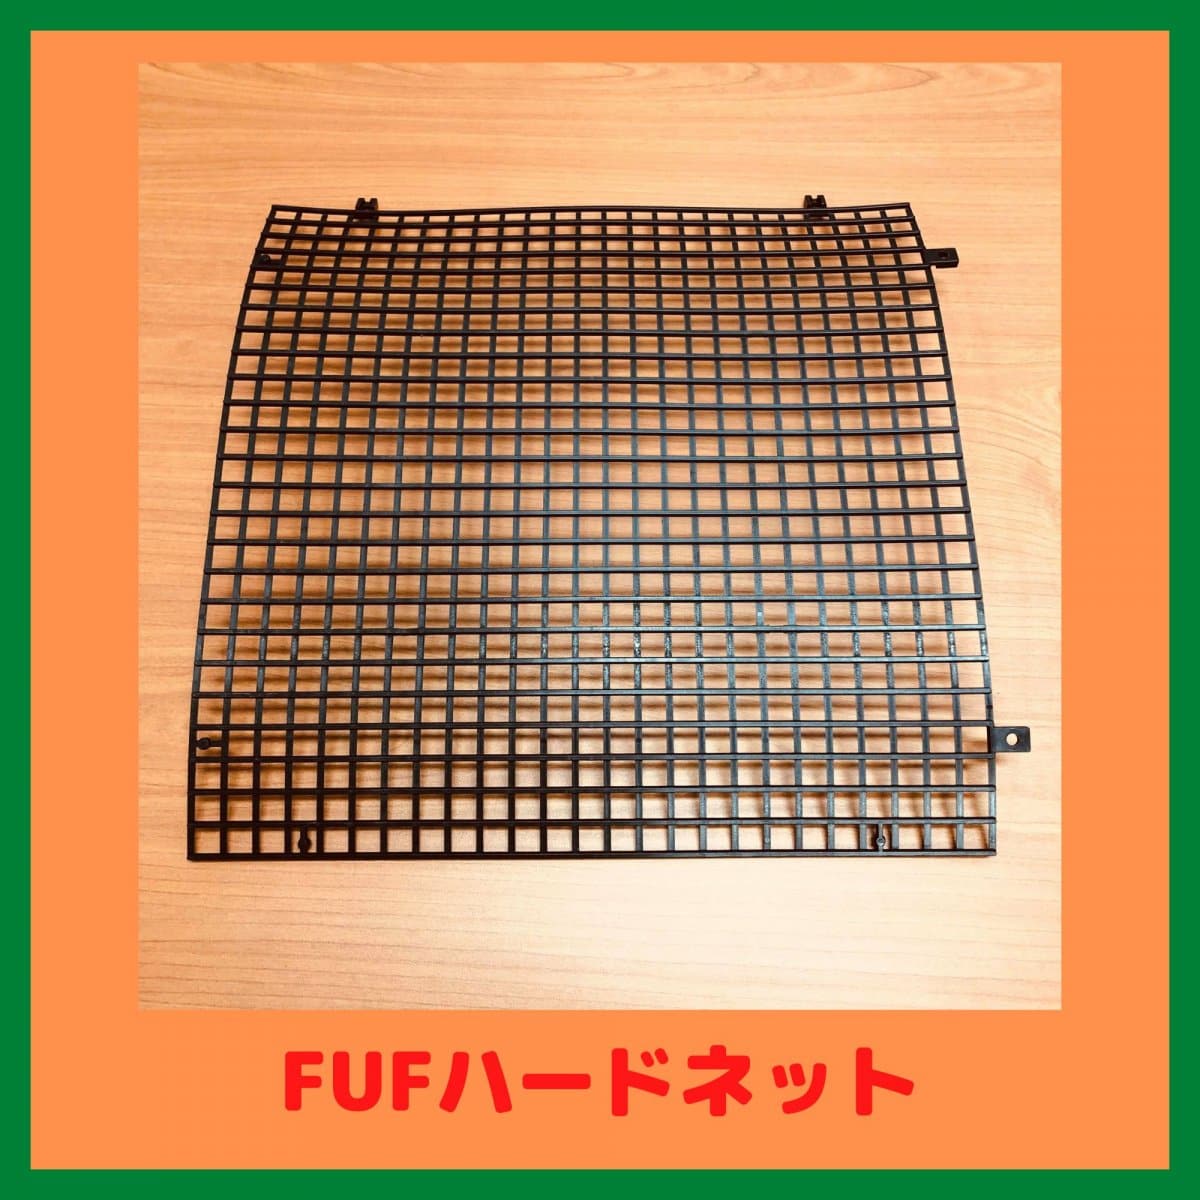 FUFハードネット (30cm×30cm)